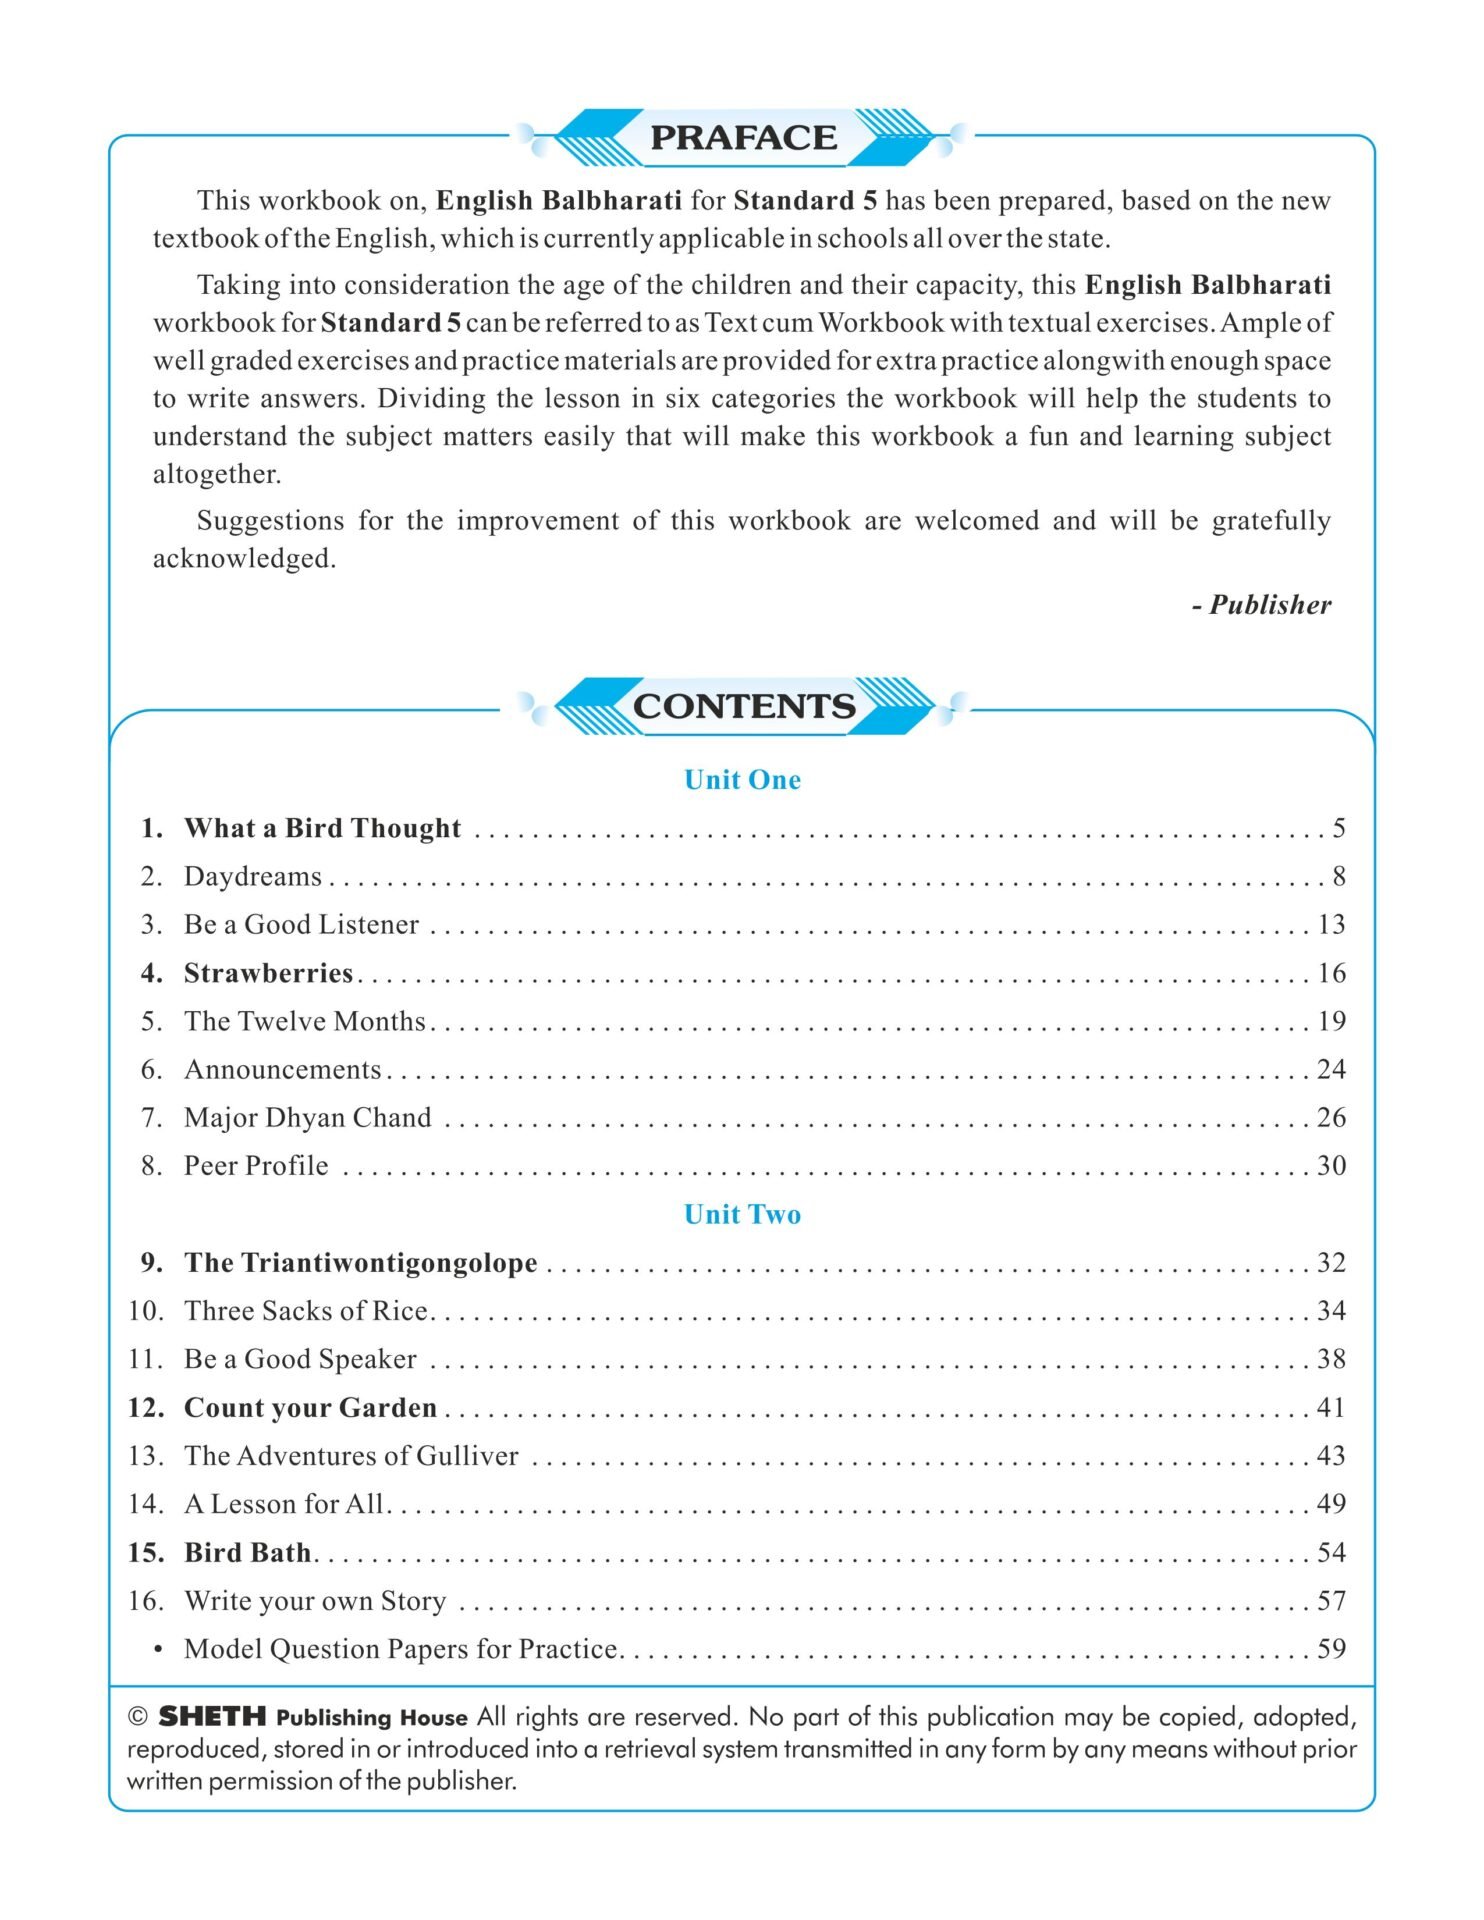 CCE Pattern Nigam Scholar Workbooks English Balbharati Standard 5 Term 1 2